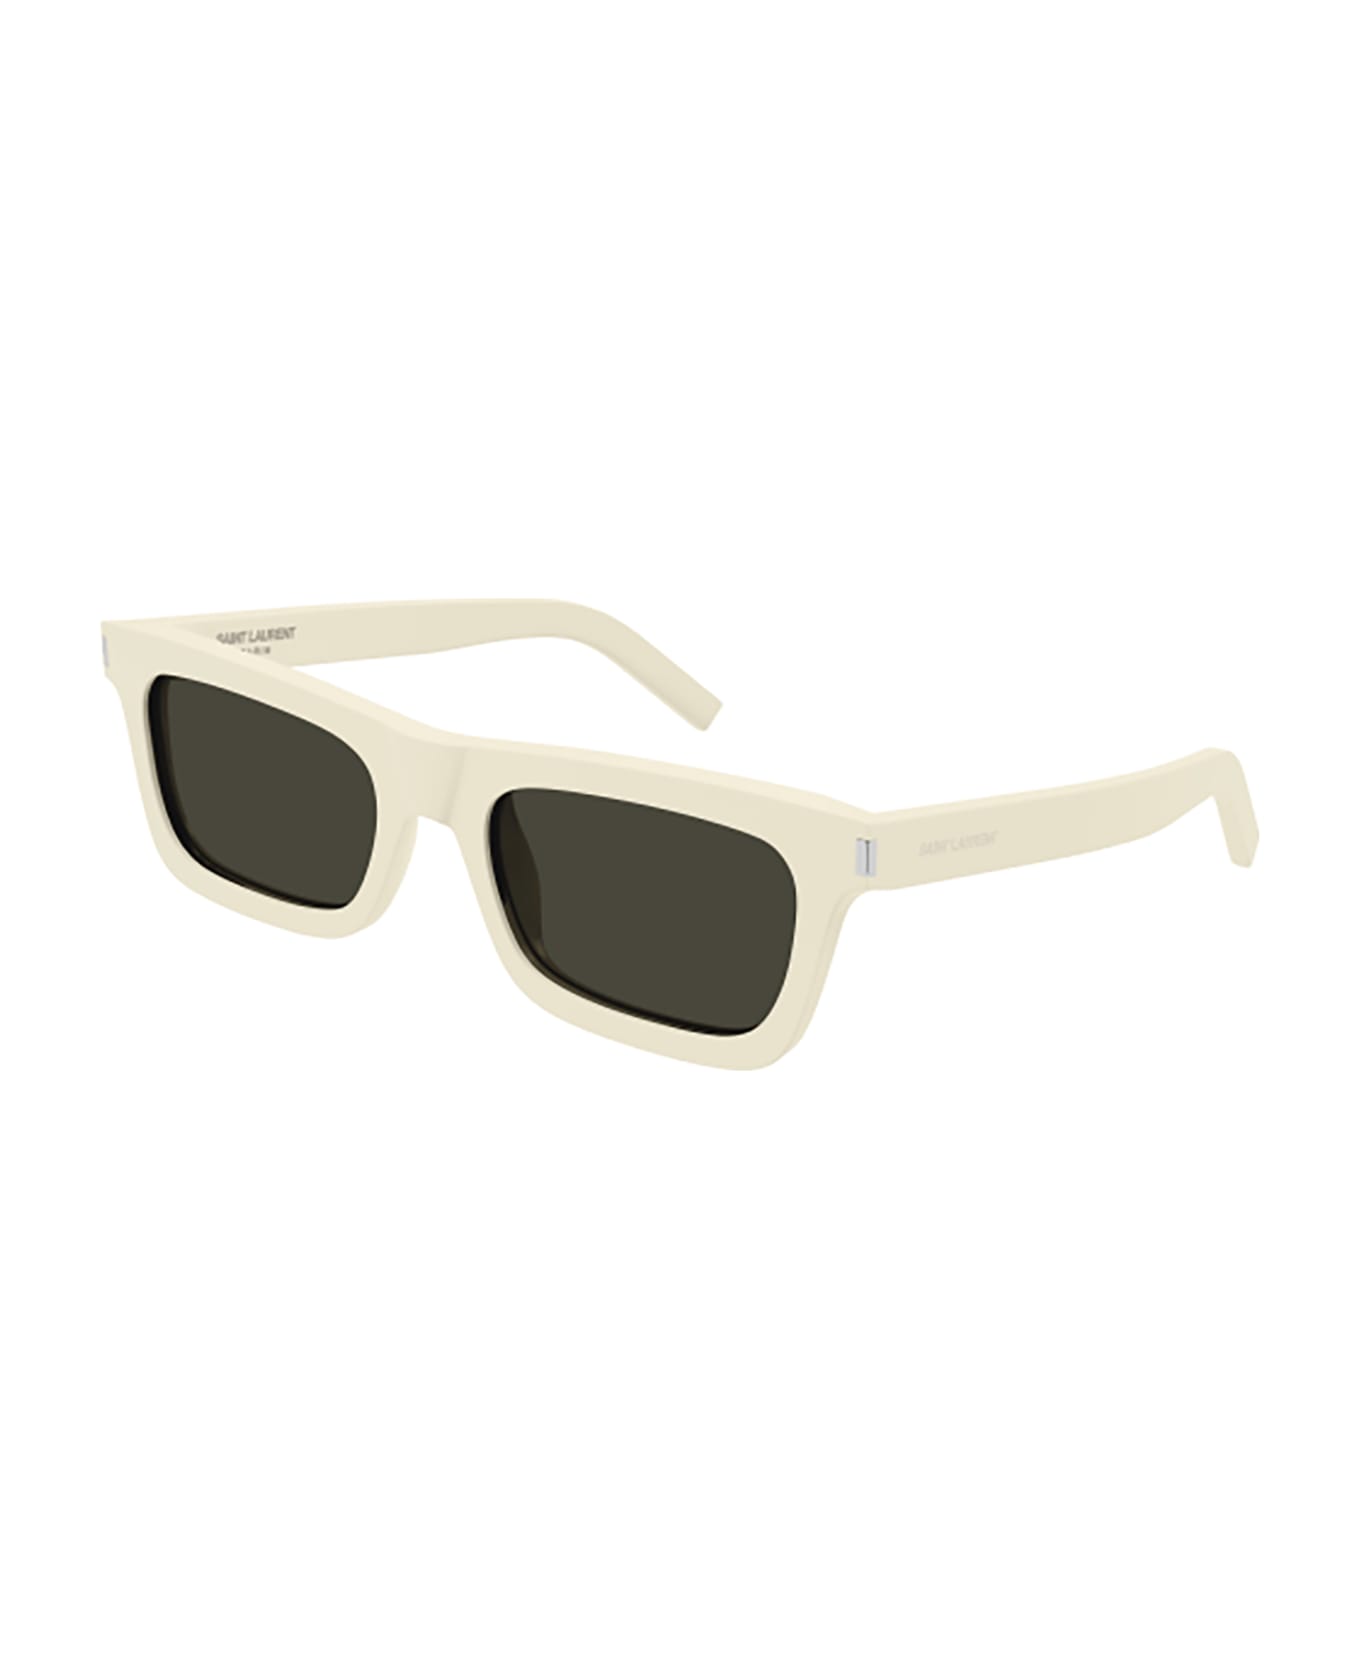 Saint Laurent Eyewear SL 461 BETTY Sunglasses - Ivory Ivory Grey サングラス